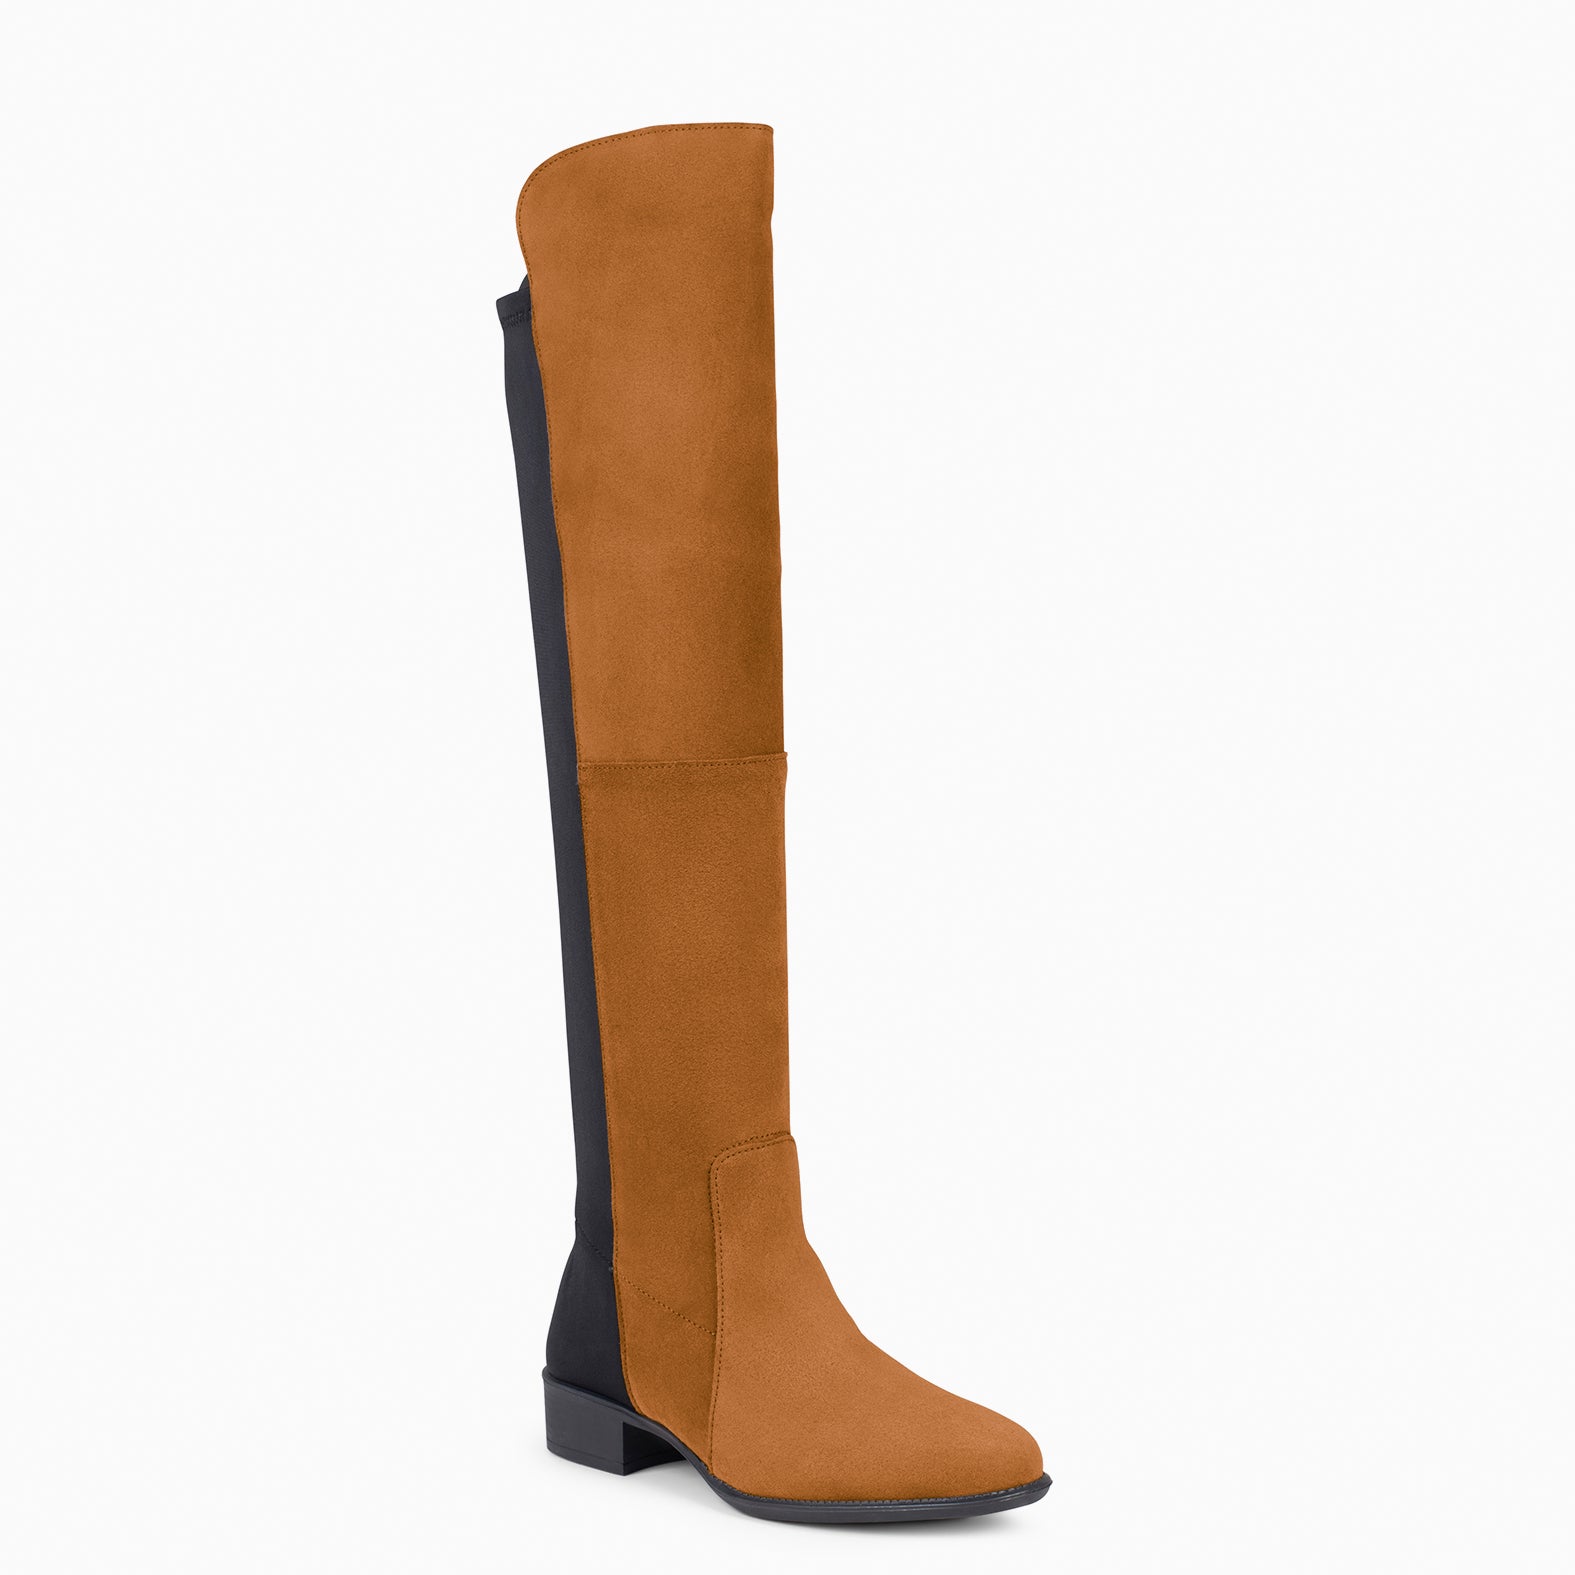 ELASTIC – CAMEL knee-high and low heel boot